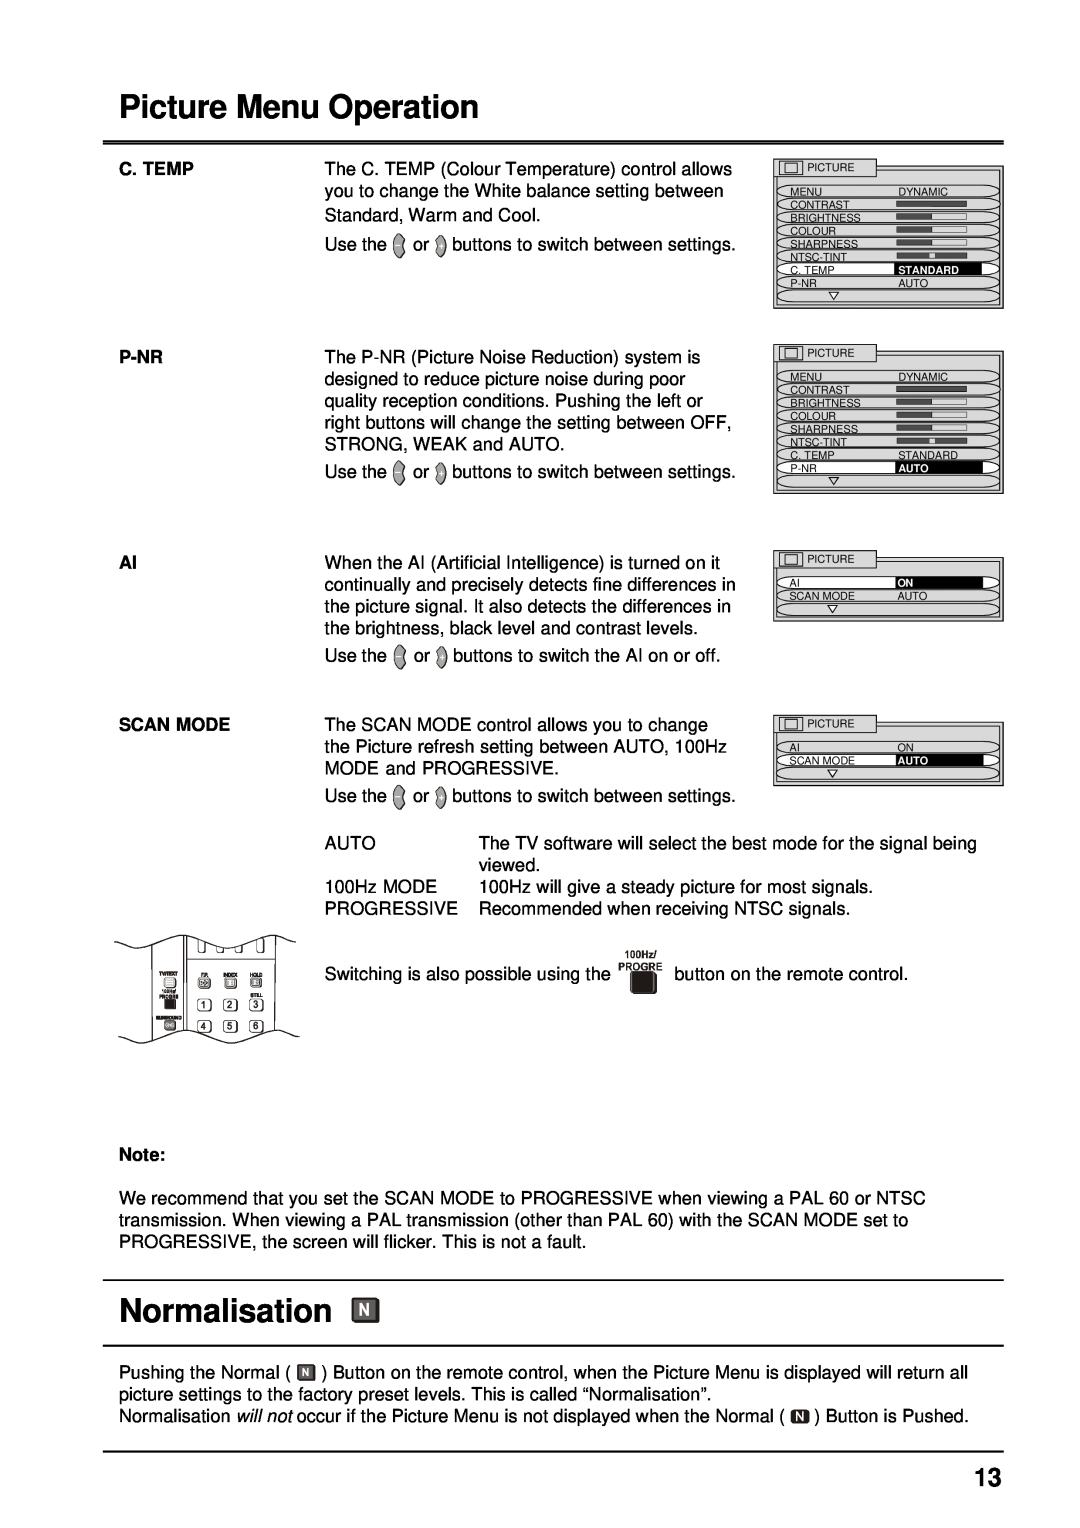 Panasonic TX-68P200A manual Normalisation, Picture Menu Operation, C. Temp, P-Nr, Scan Mode 